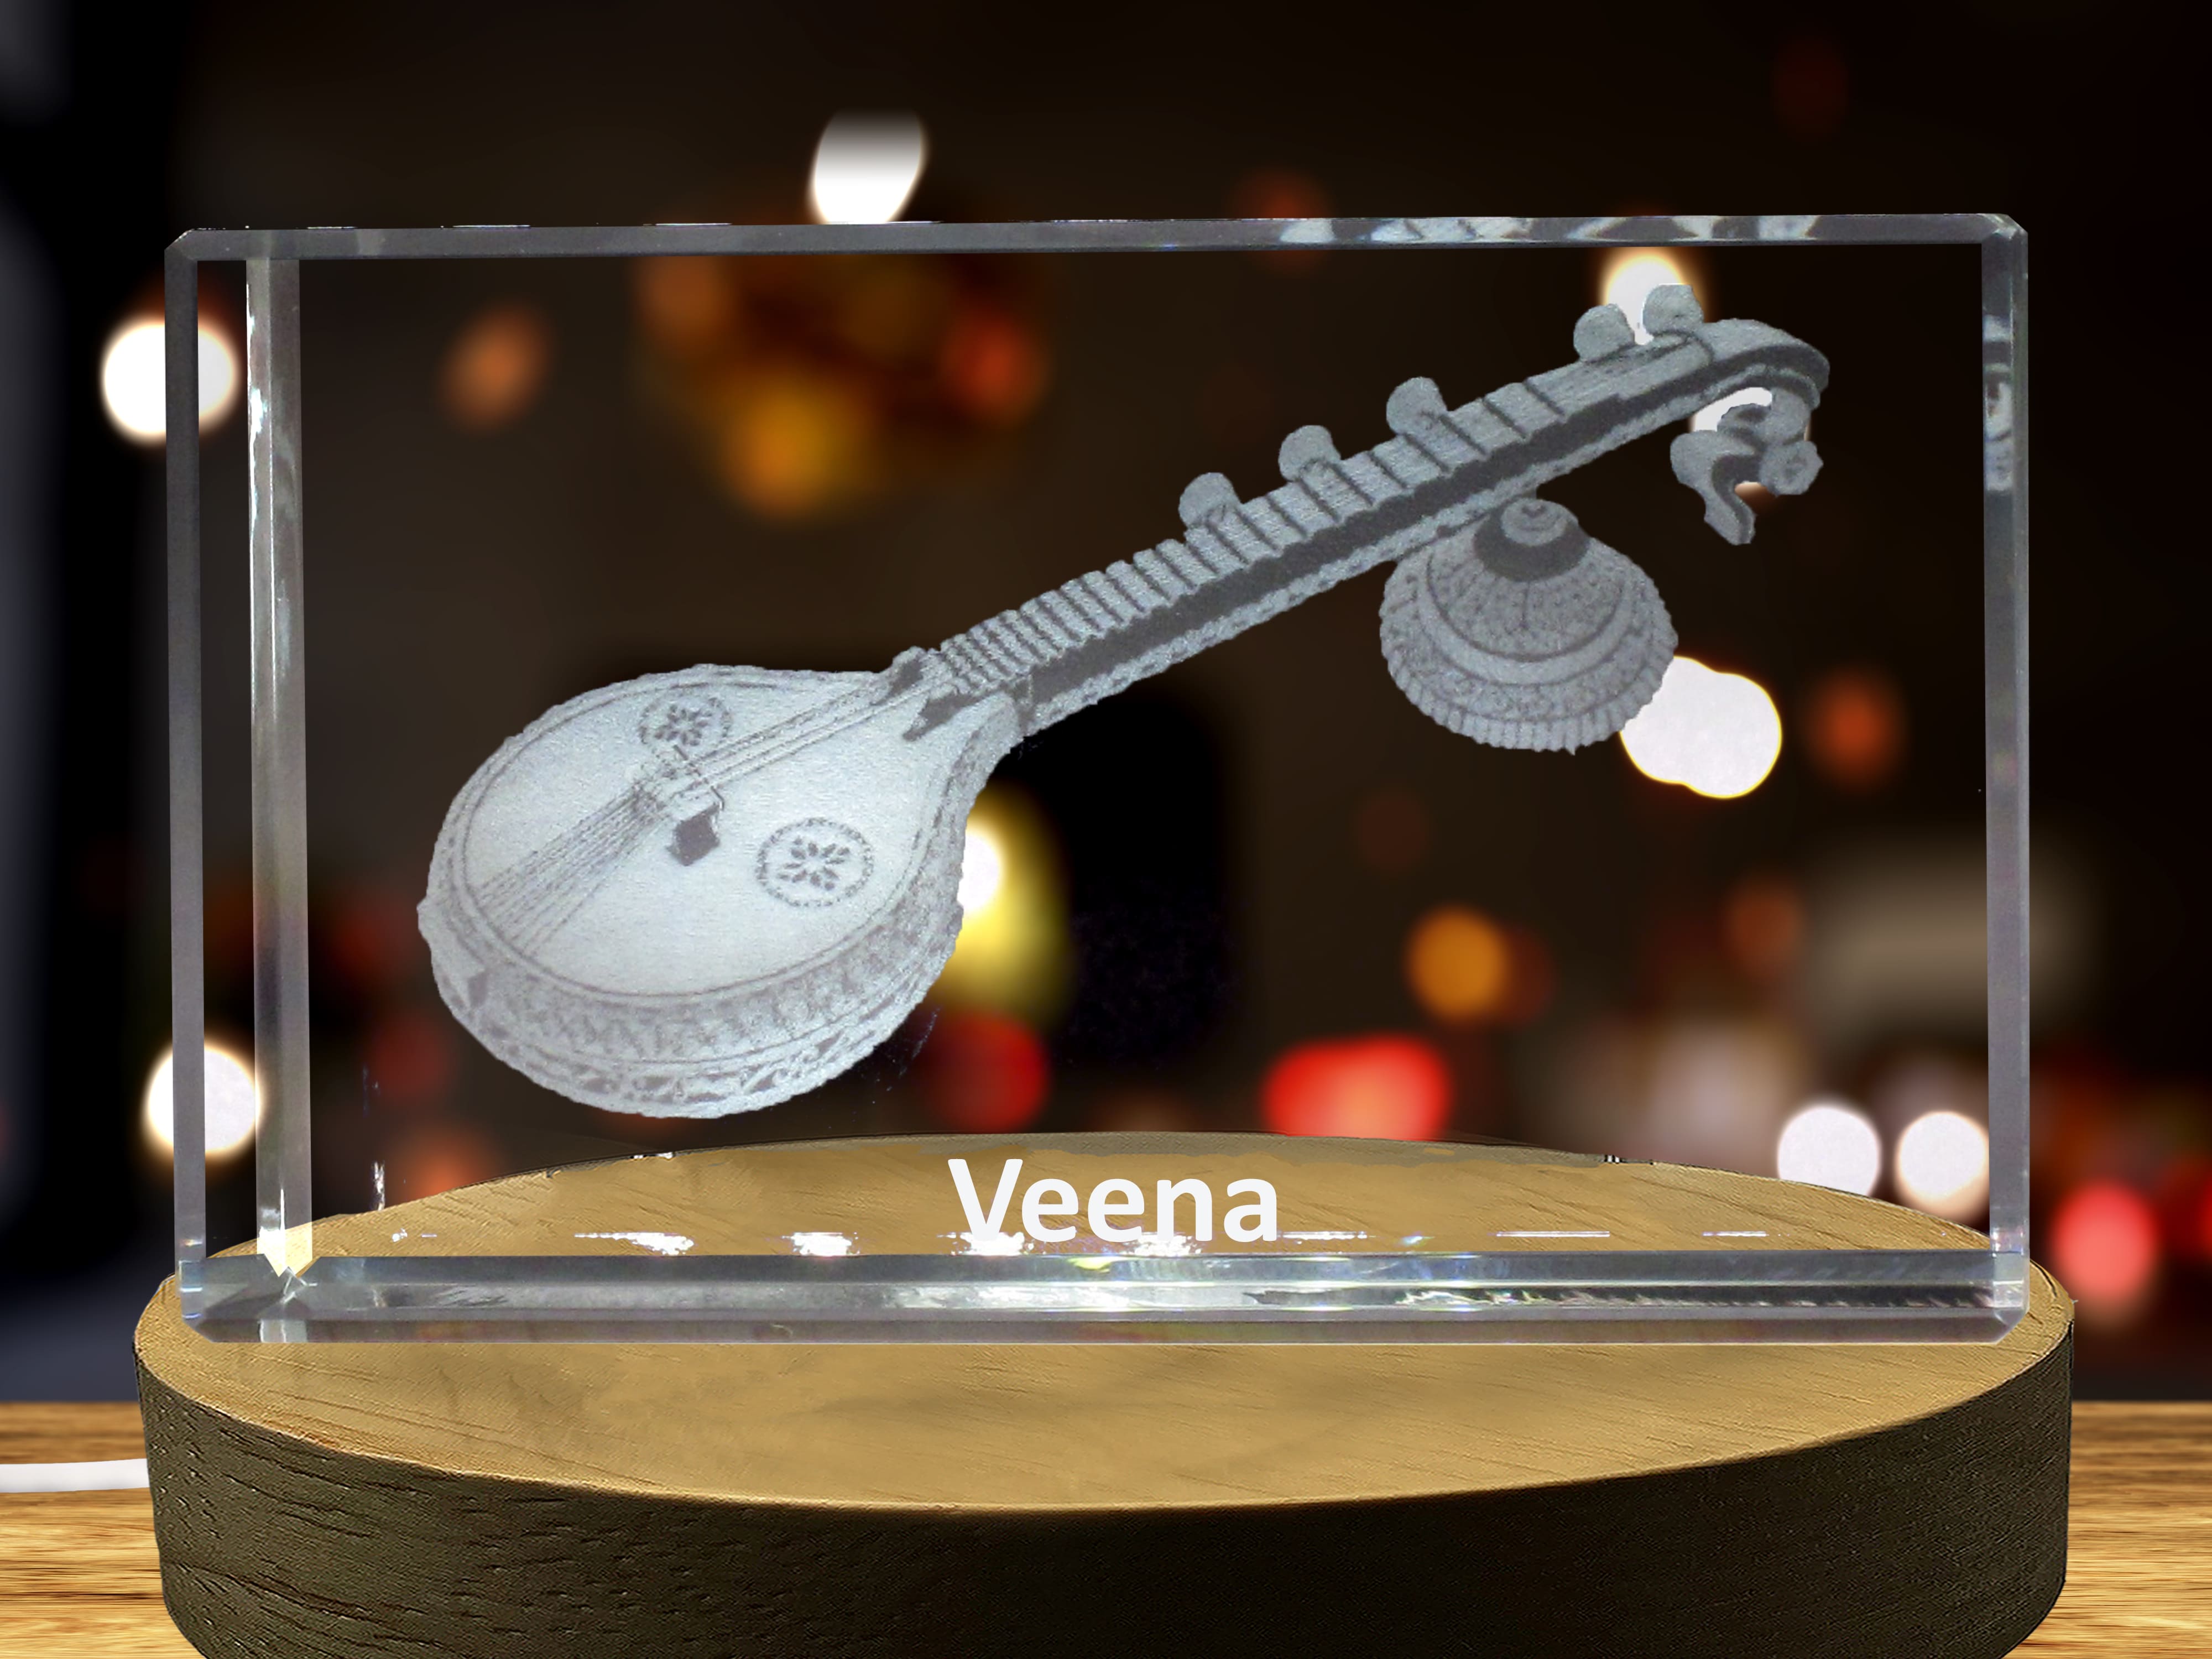 Veena 3D Engraved Crystal 3D Engraved Crystal Keepsake/Gift/Decor/Collectible/Souvenir A&B Crystal Collection